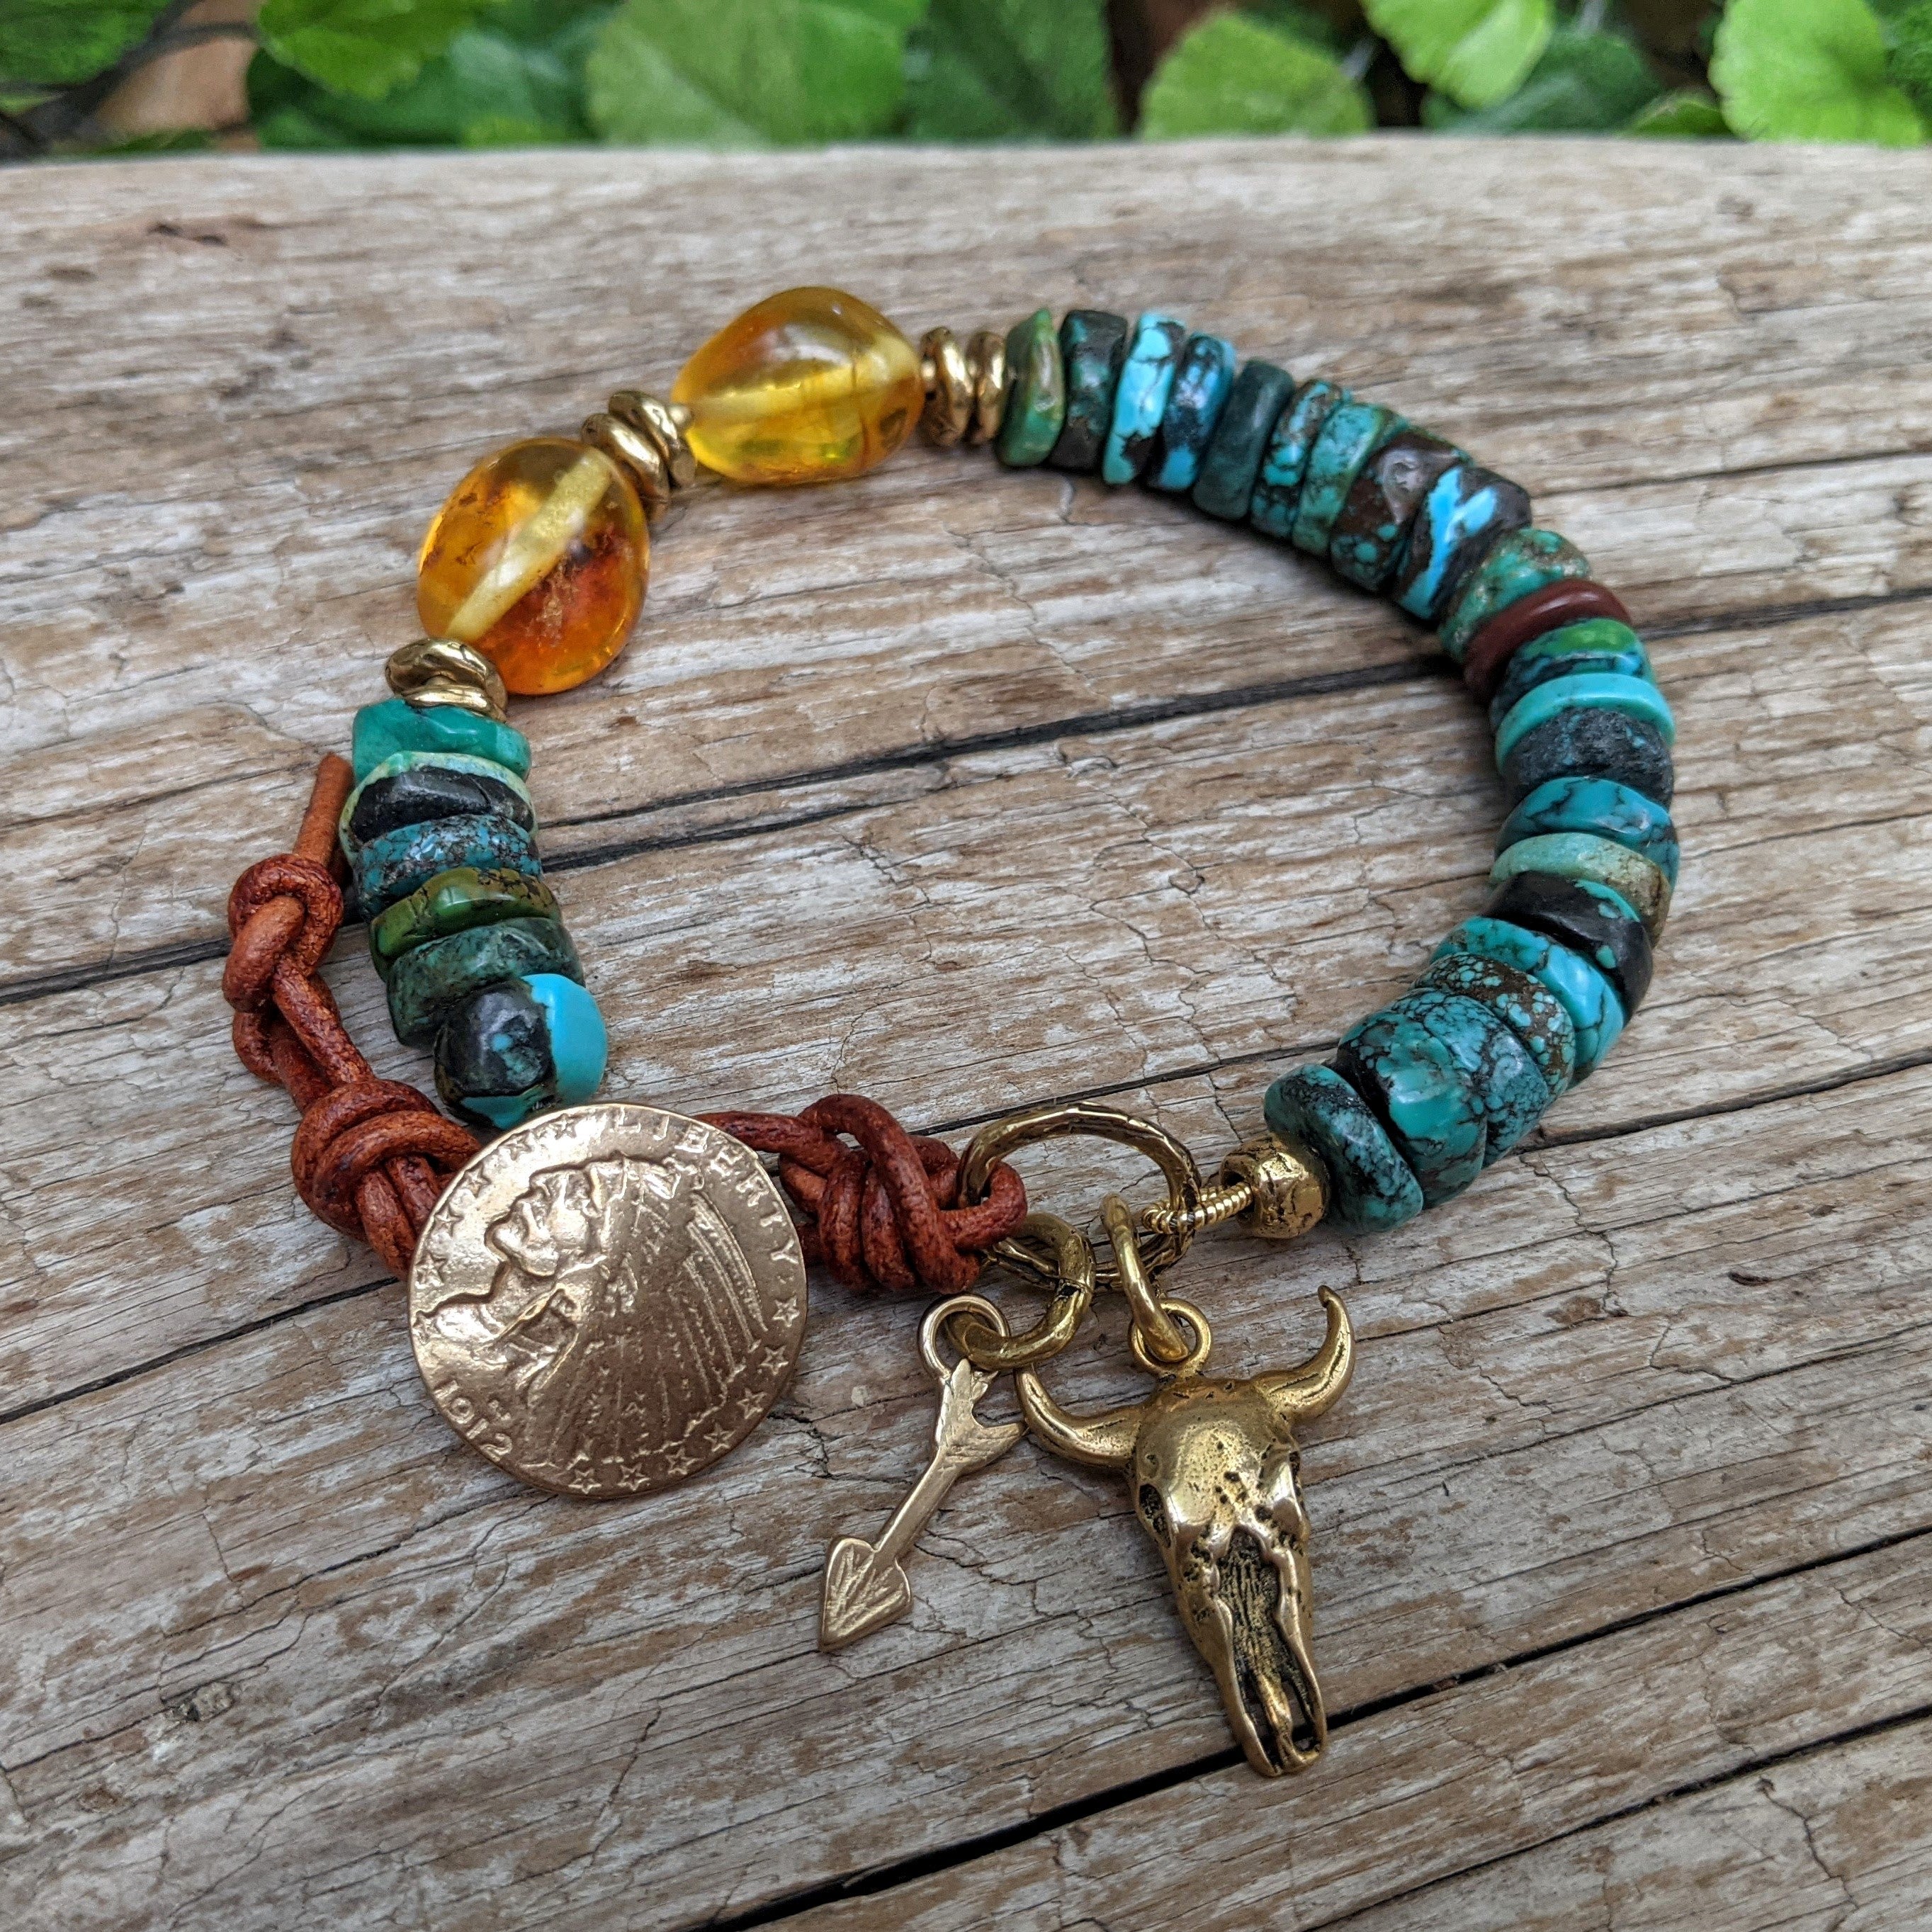 Genuine turquoise & Baltic amber bracelet. Indian head & steer Skull bracelet. Handcrafted by Aurora Creative Jewellery.